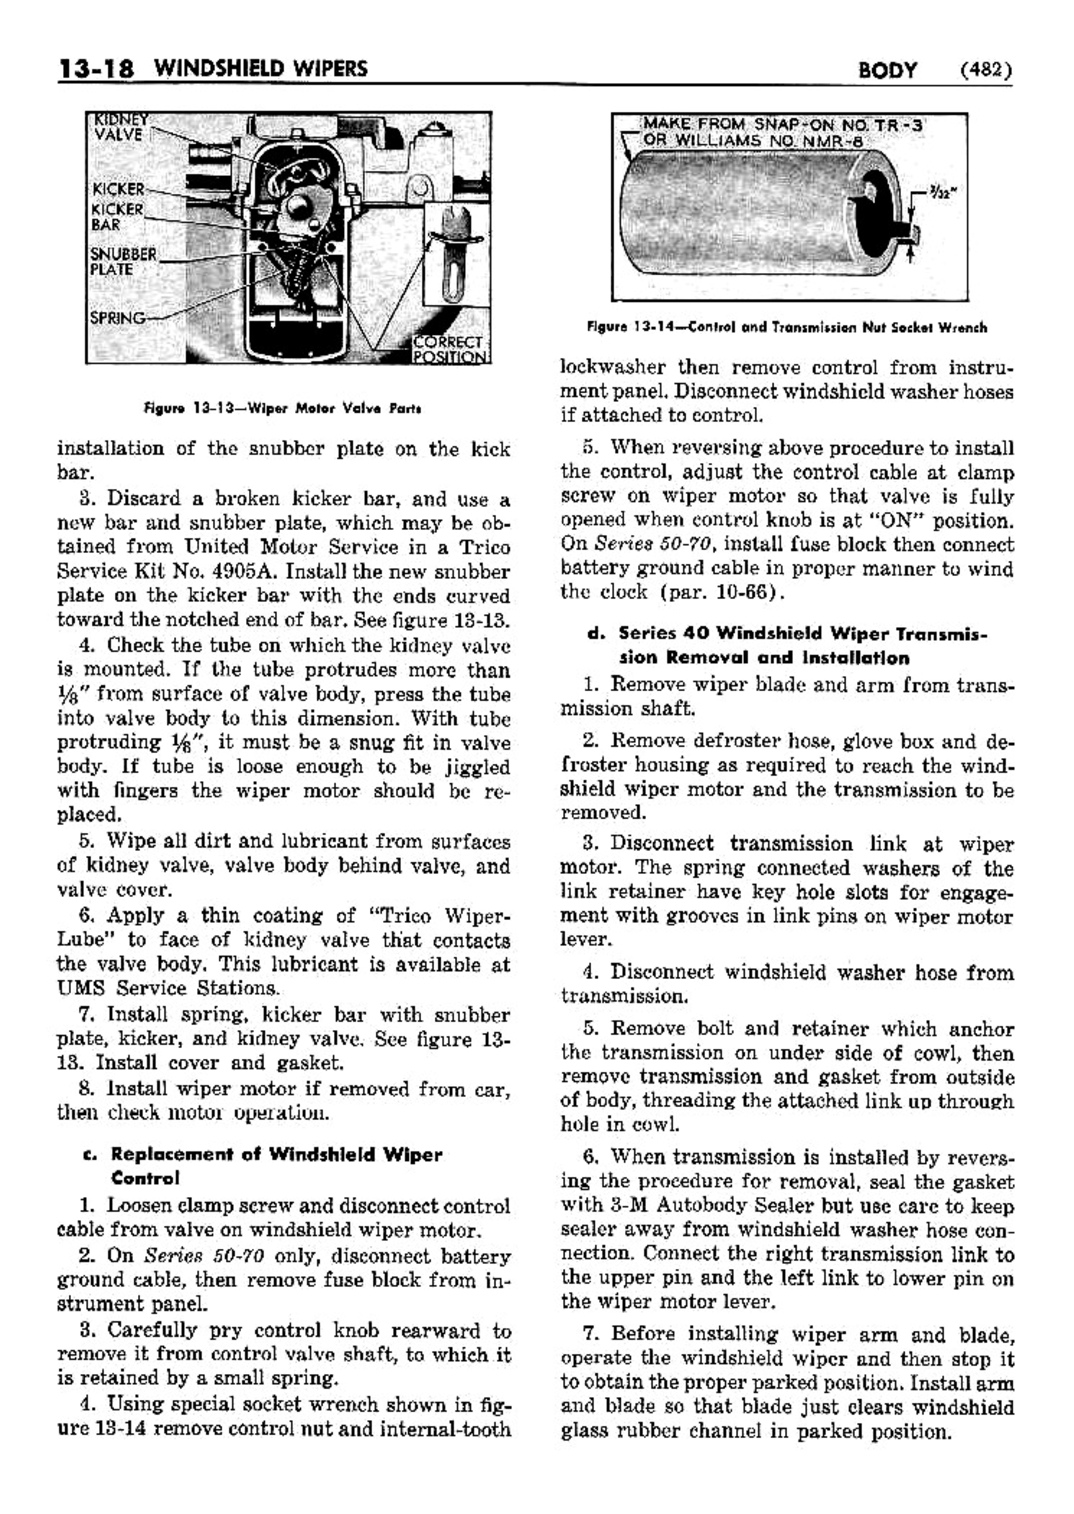 n_14 1952 Buick Shop Manual - Body-018-018.jpg